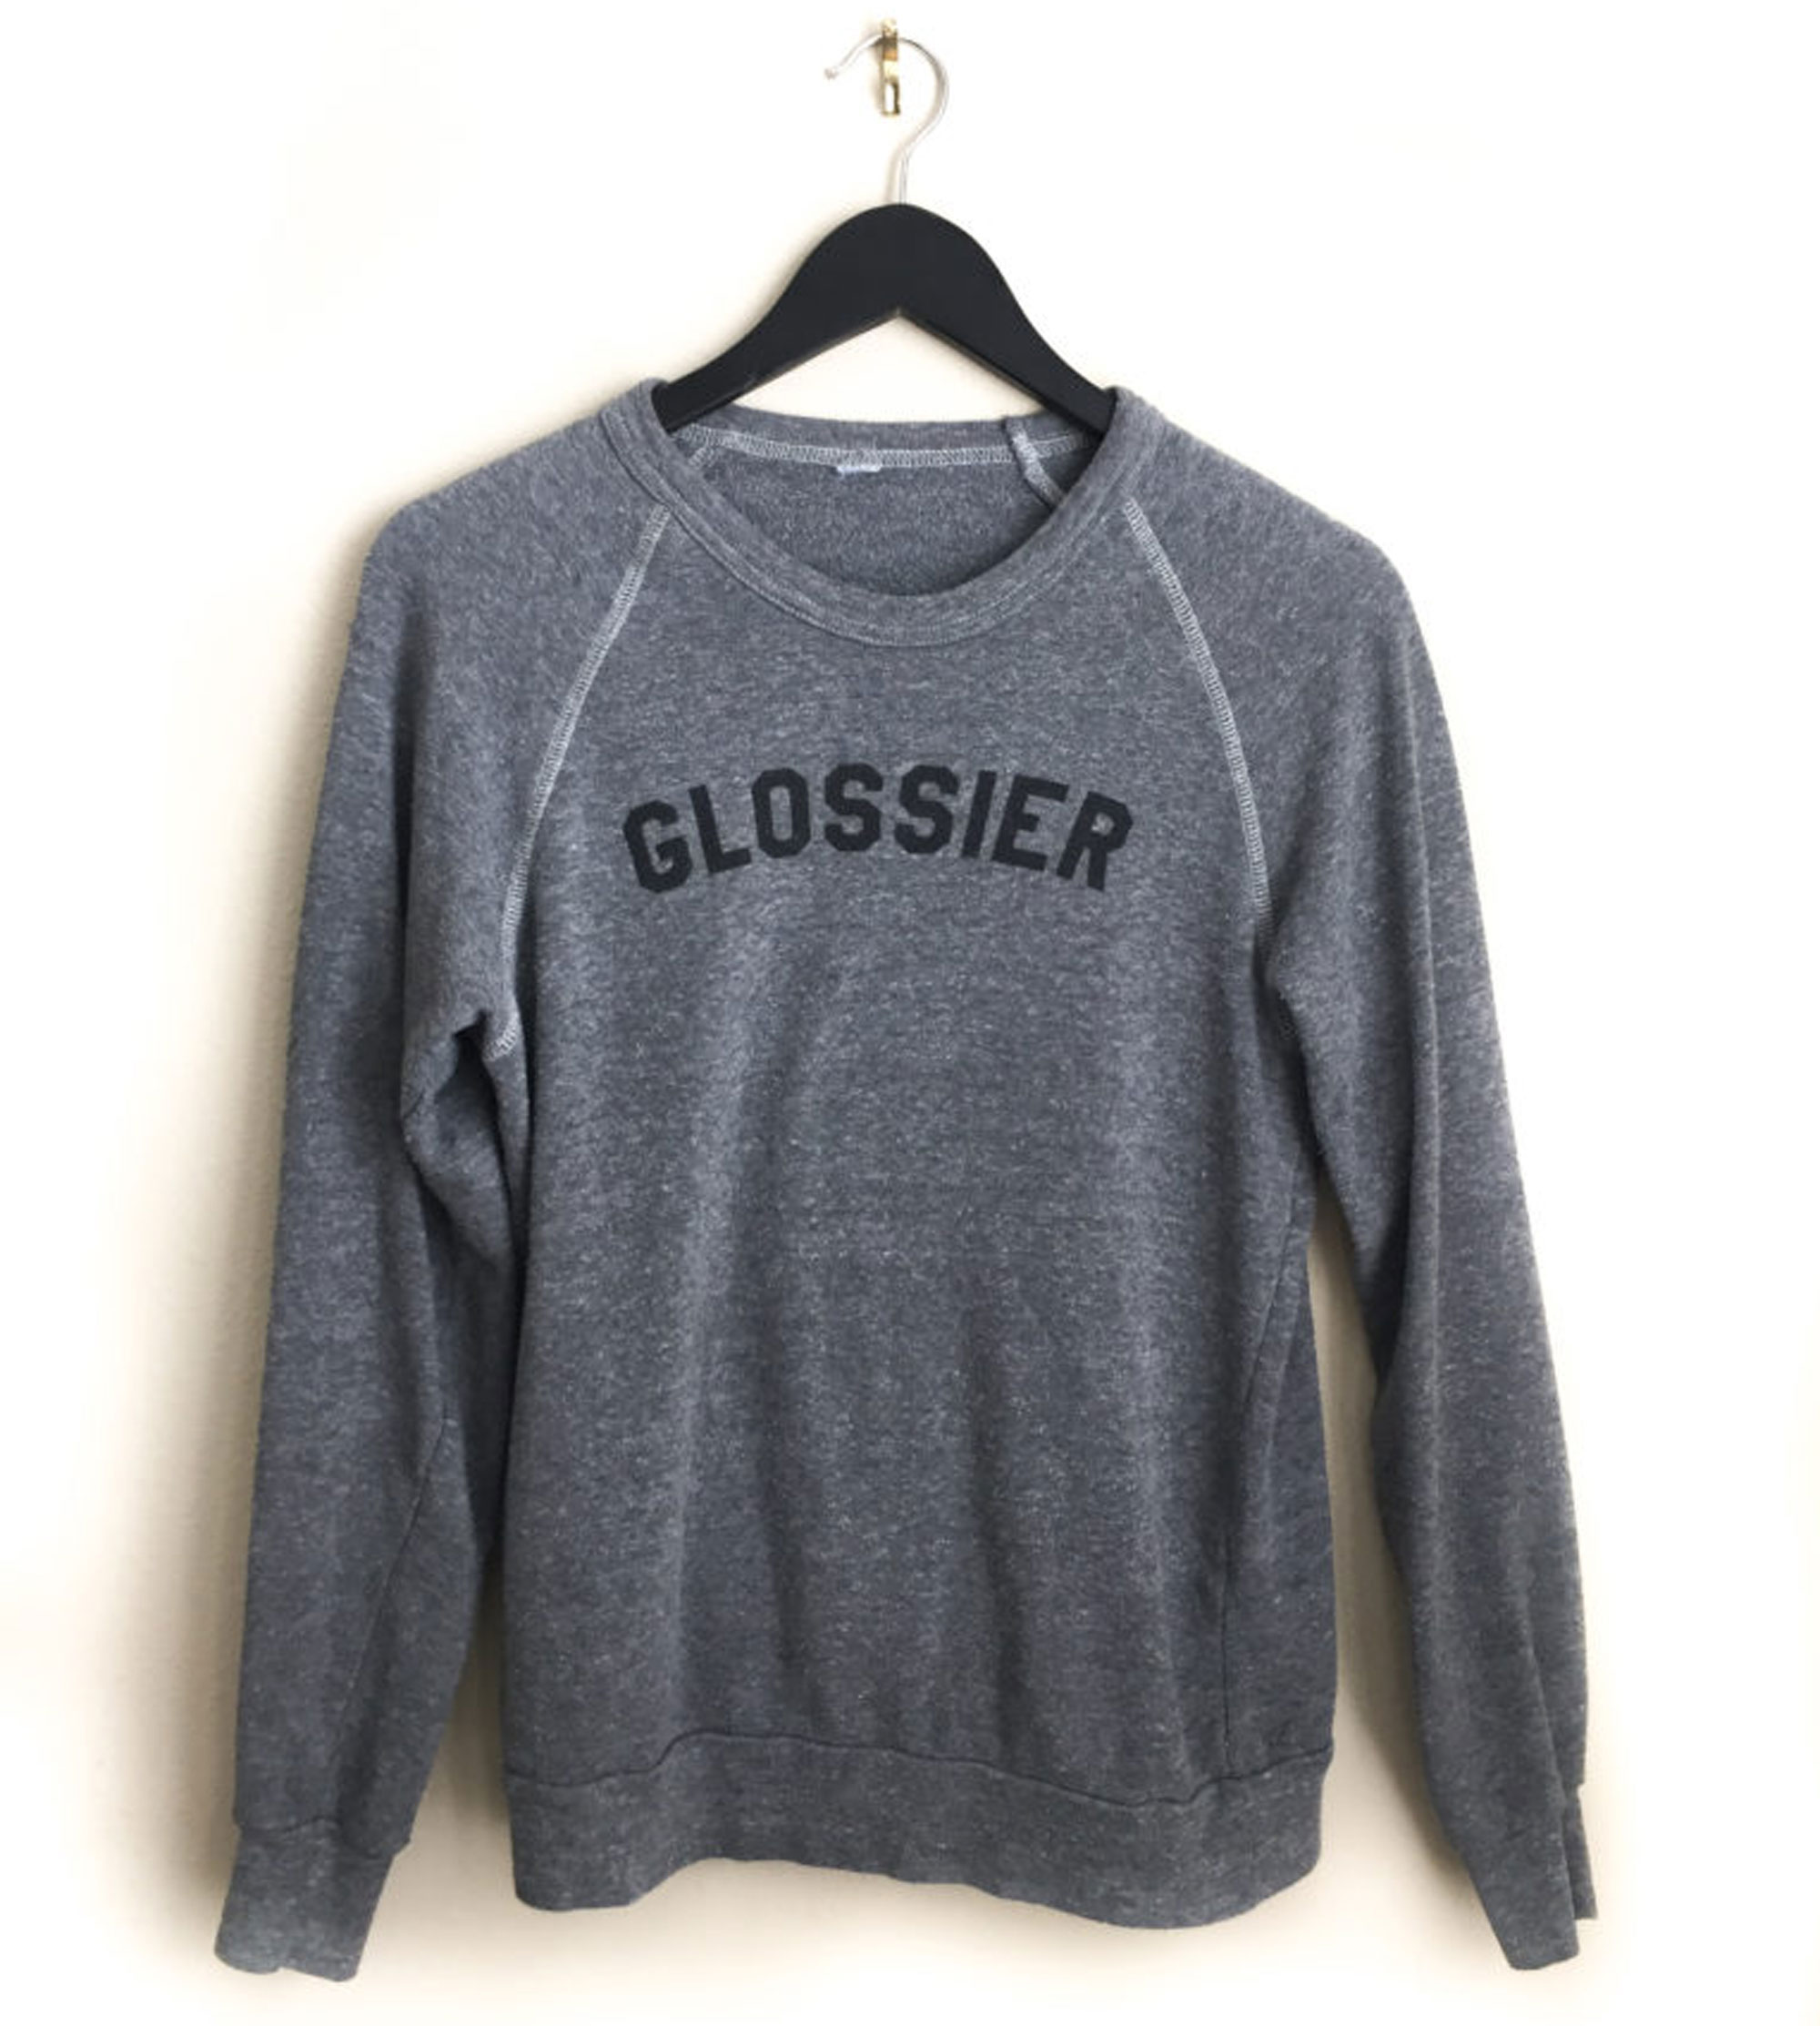 Buy > glossier sweatshirt > in stock